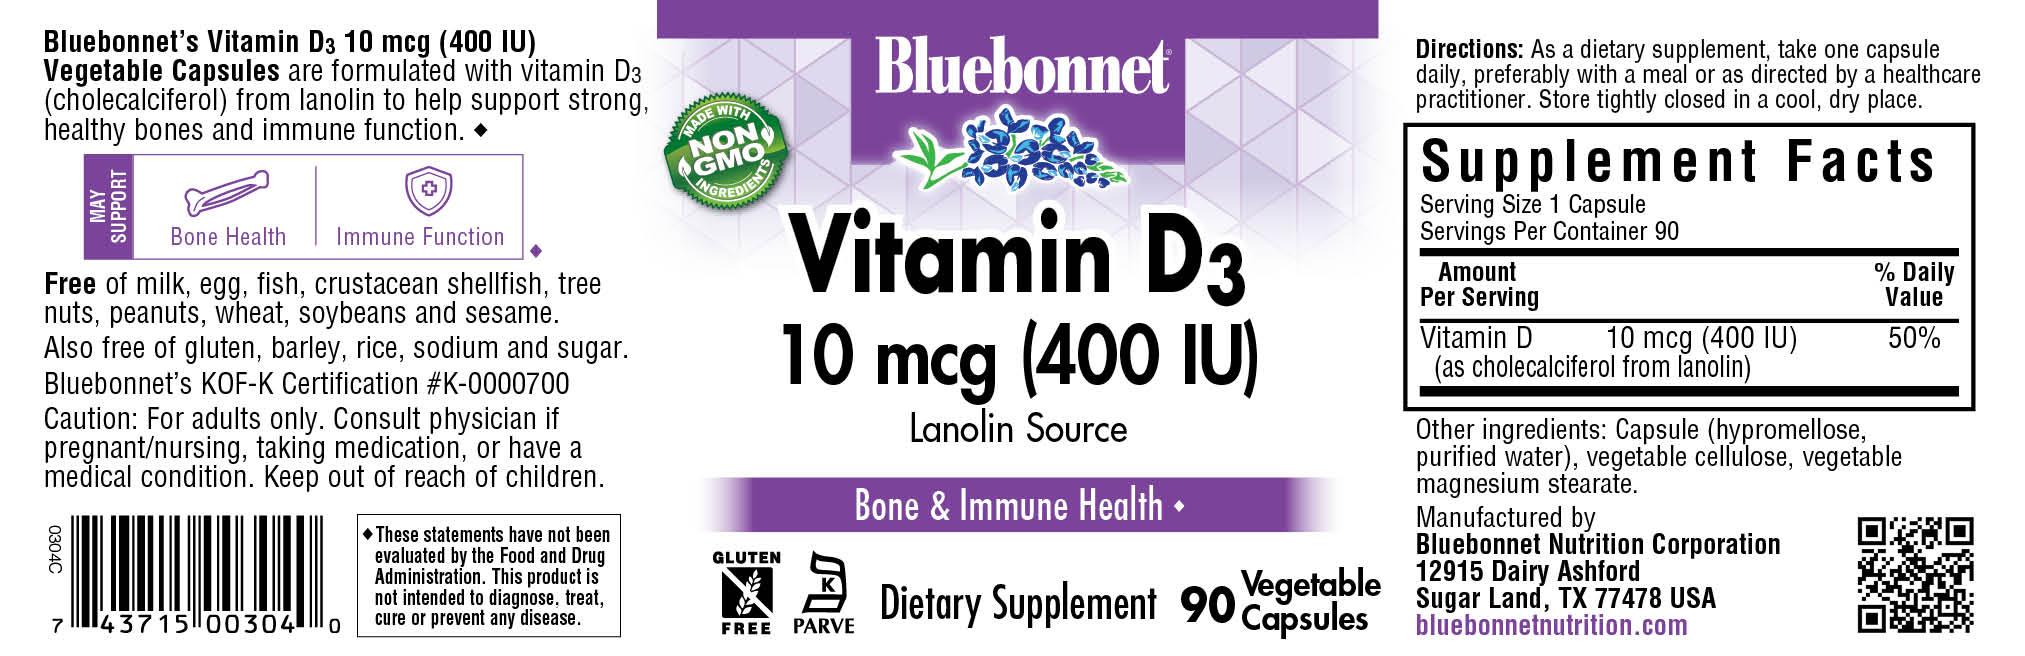 Bluebonnet’s Vitamin D3 400 IU Vegetable Capsules provide vitamin D3 (cholecalciferol) from lanolin.. #size_90 count